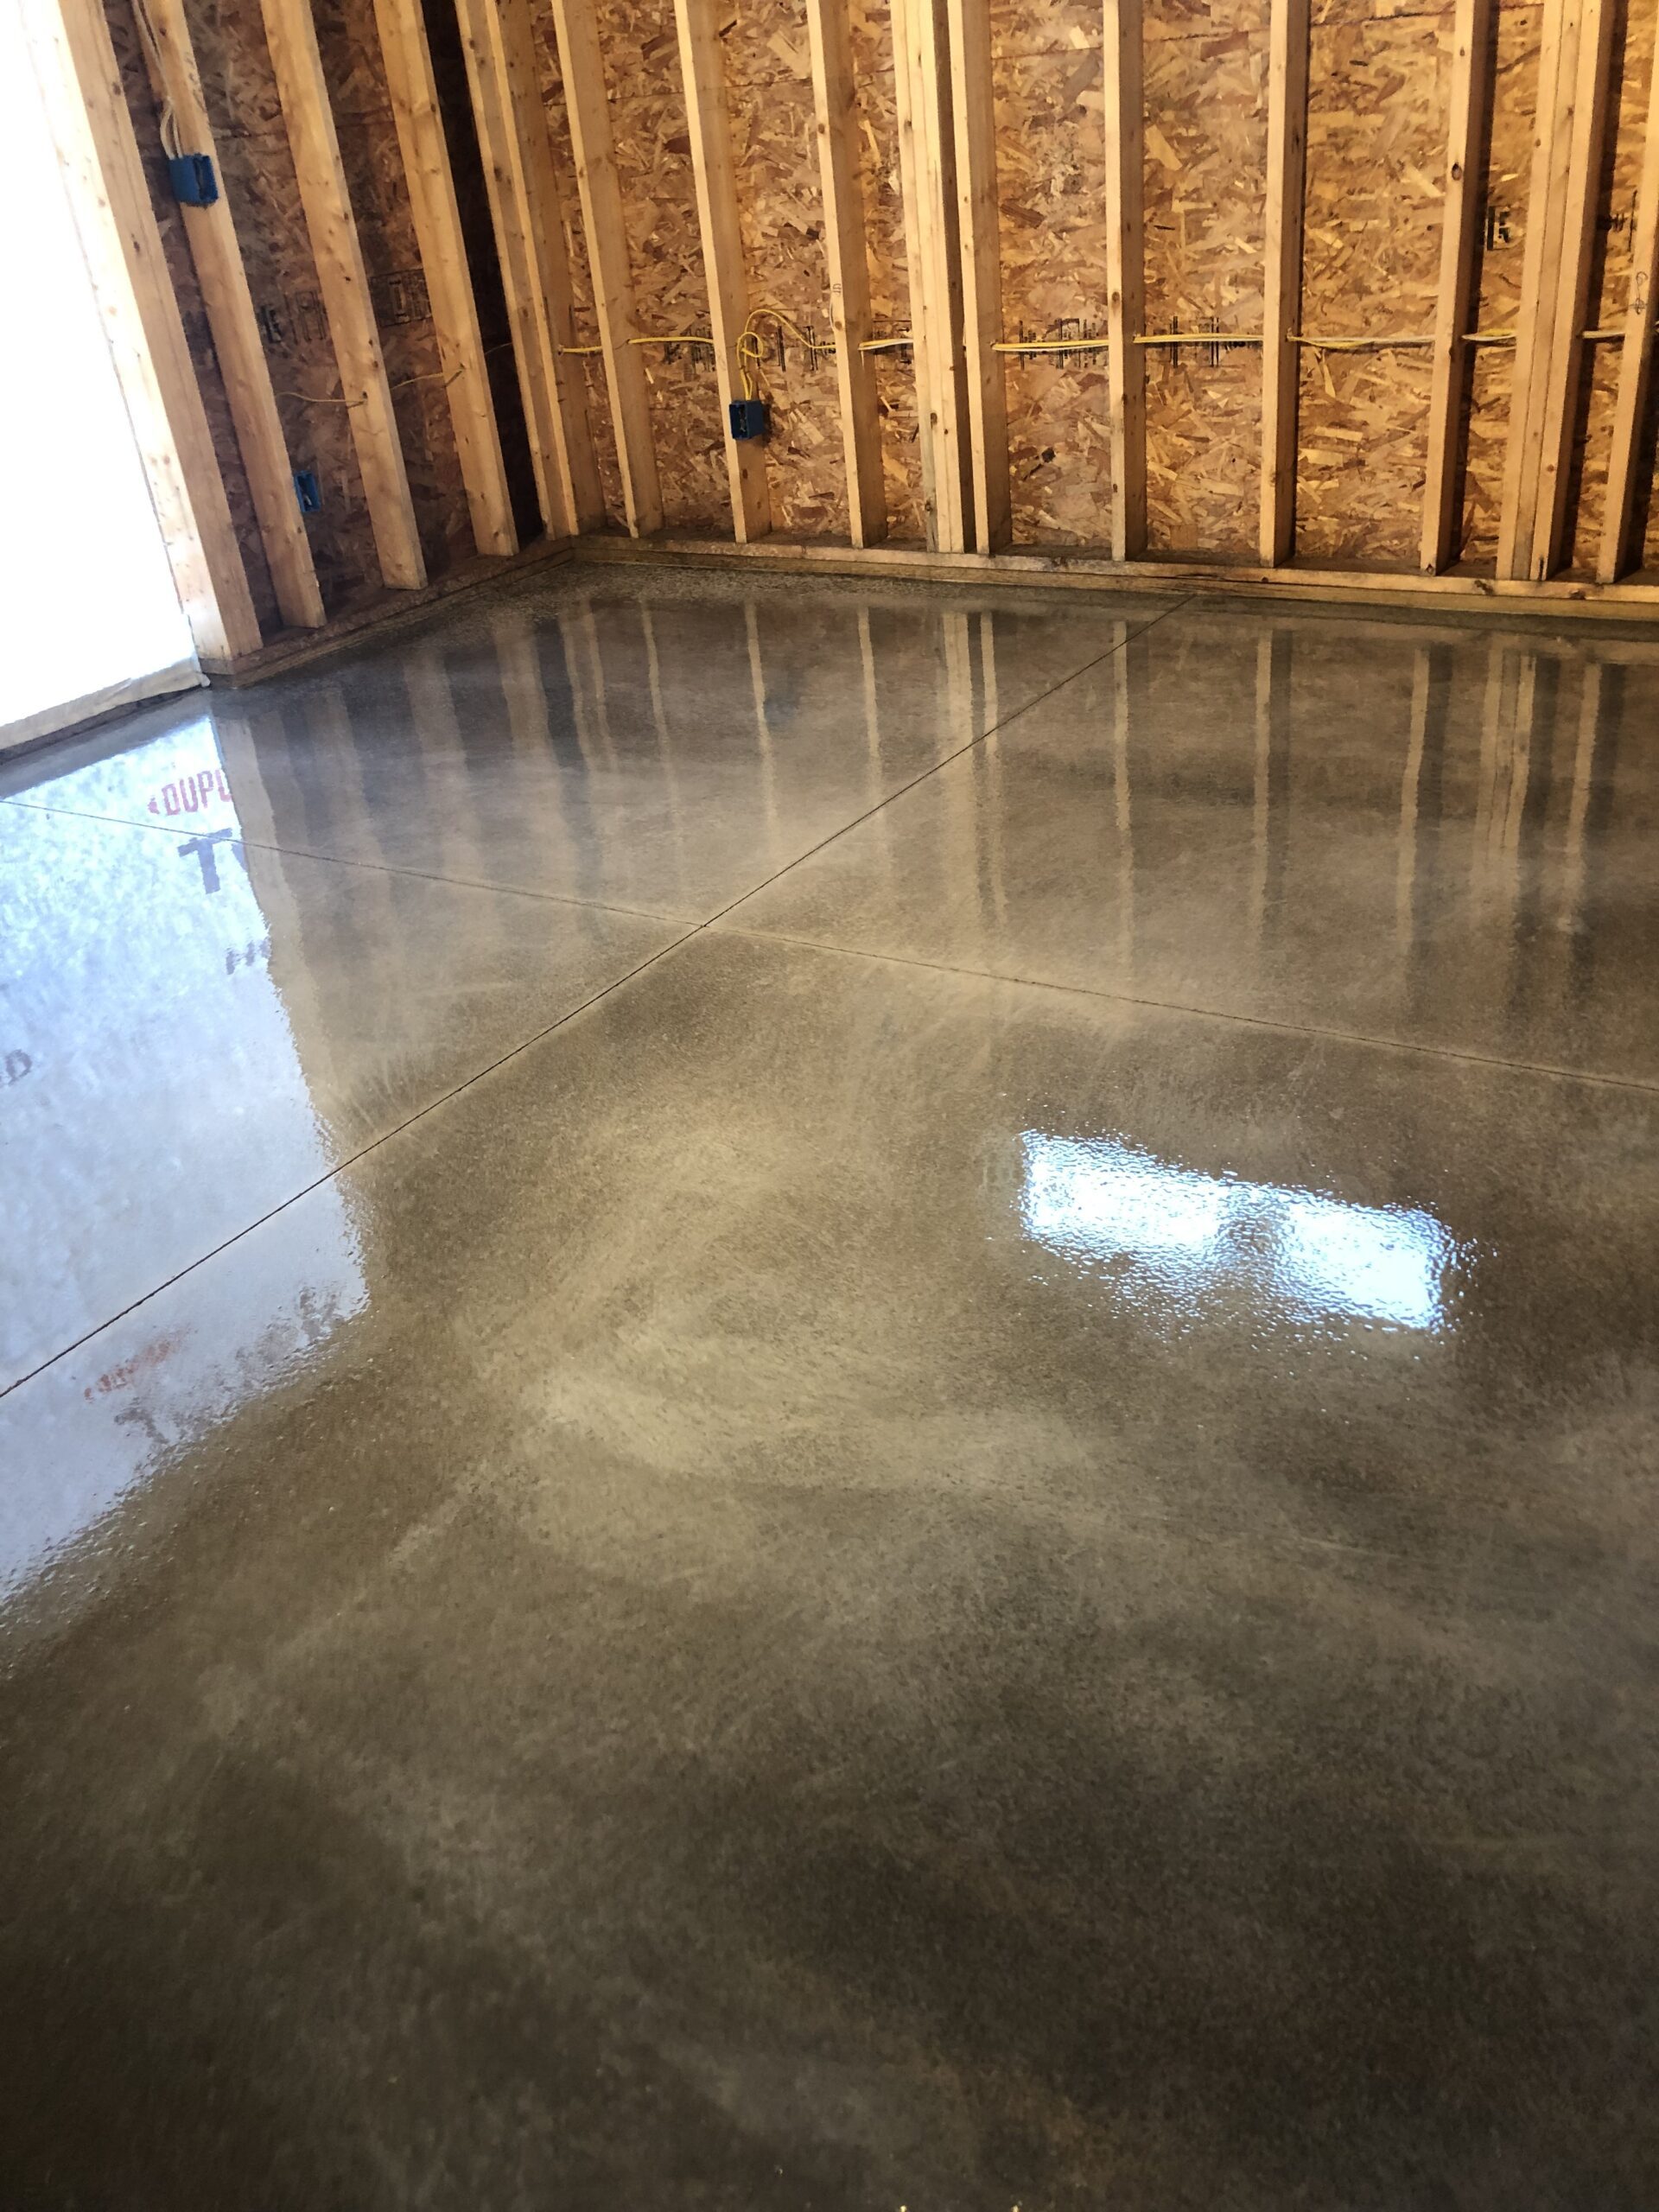 Concrete Floor After First Coat of Sealer (Still Wet)